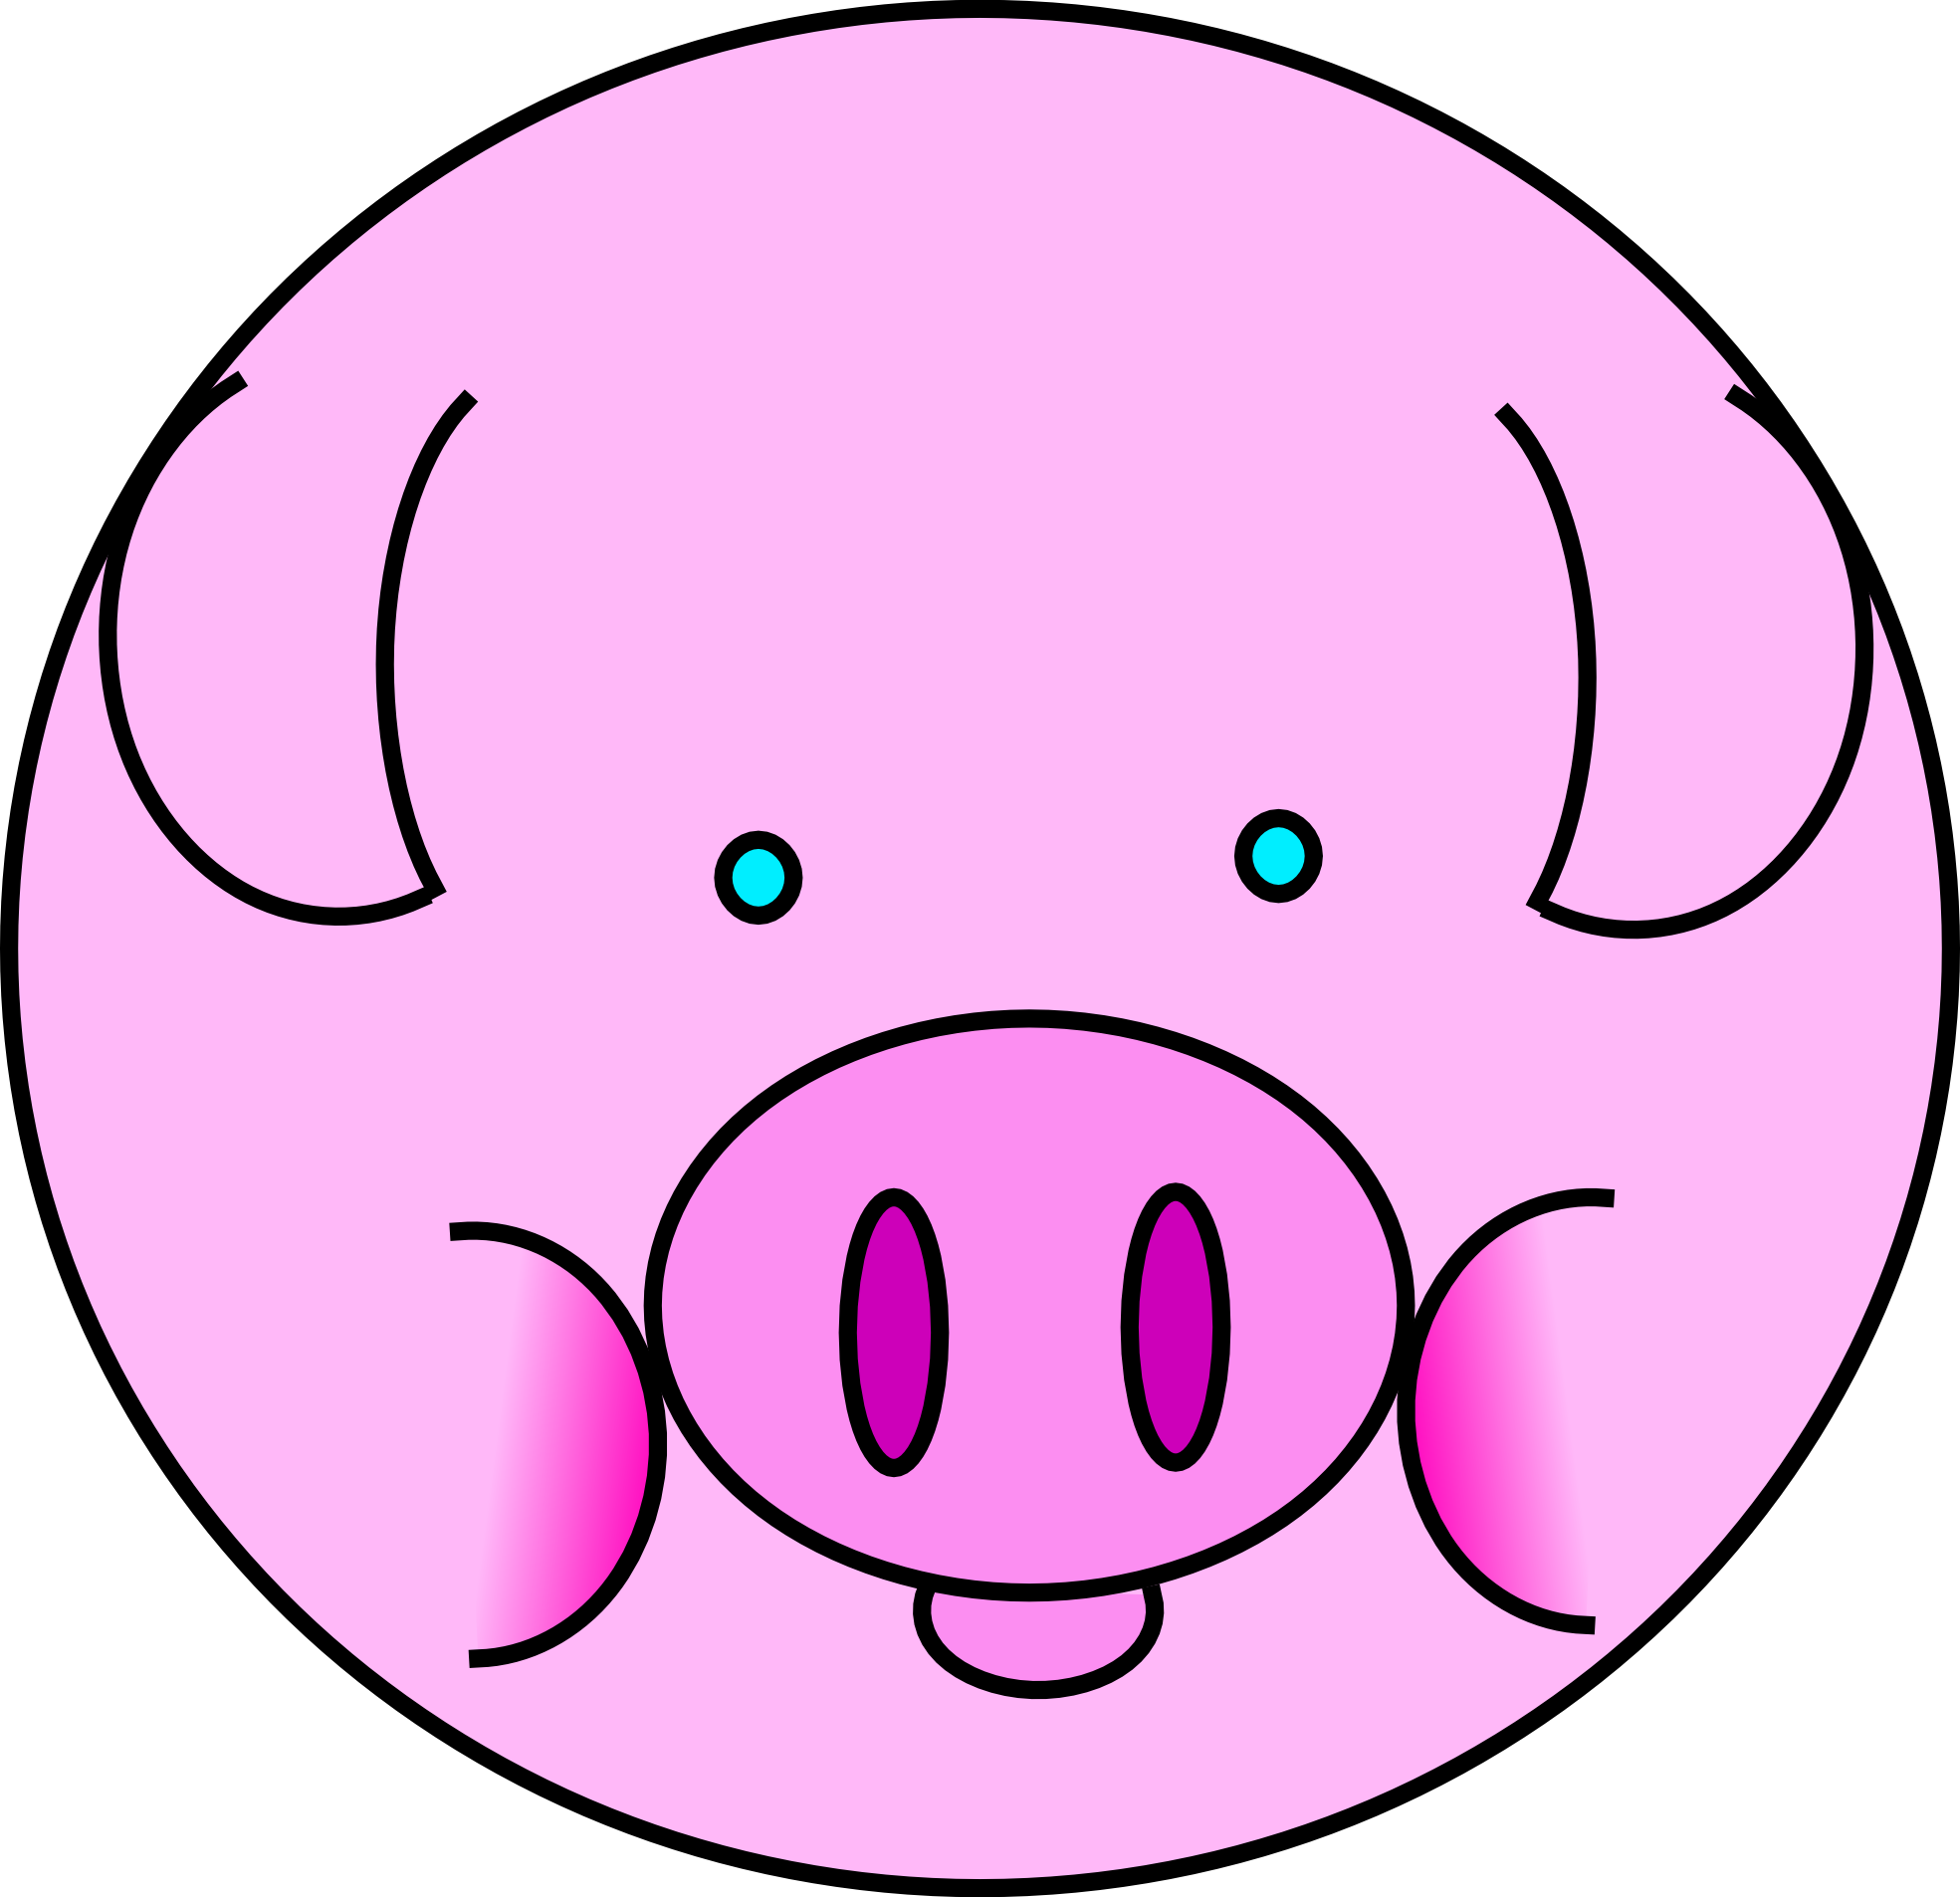 Pig face clip art zz pig free clipart images